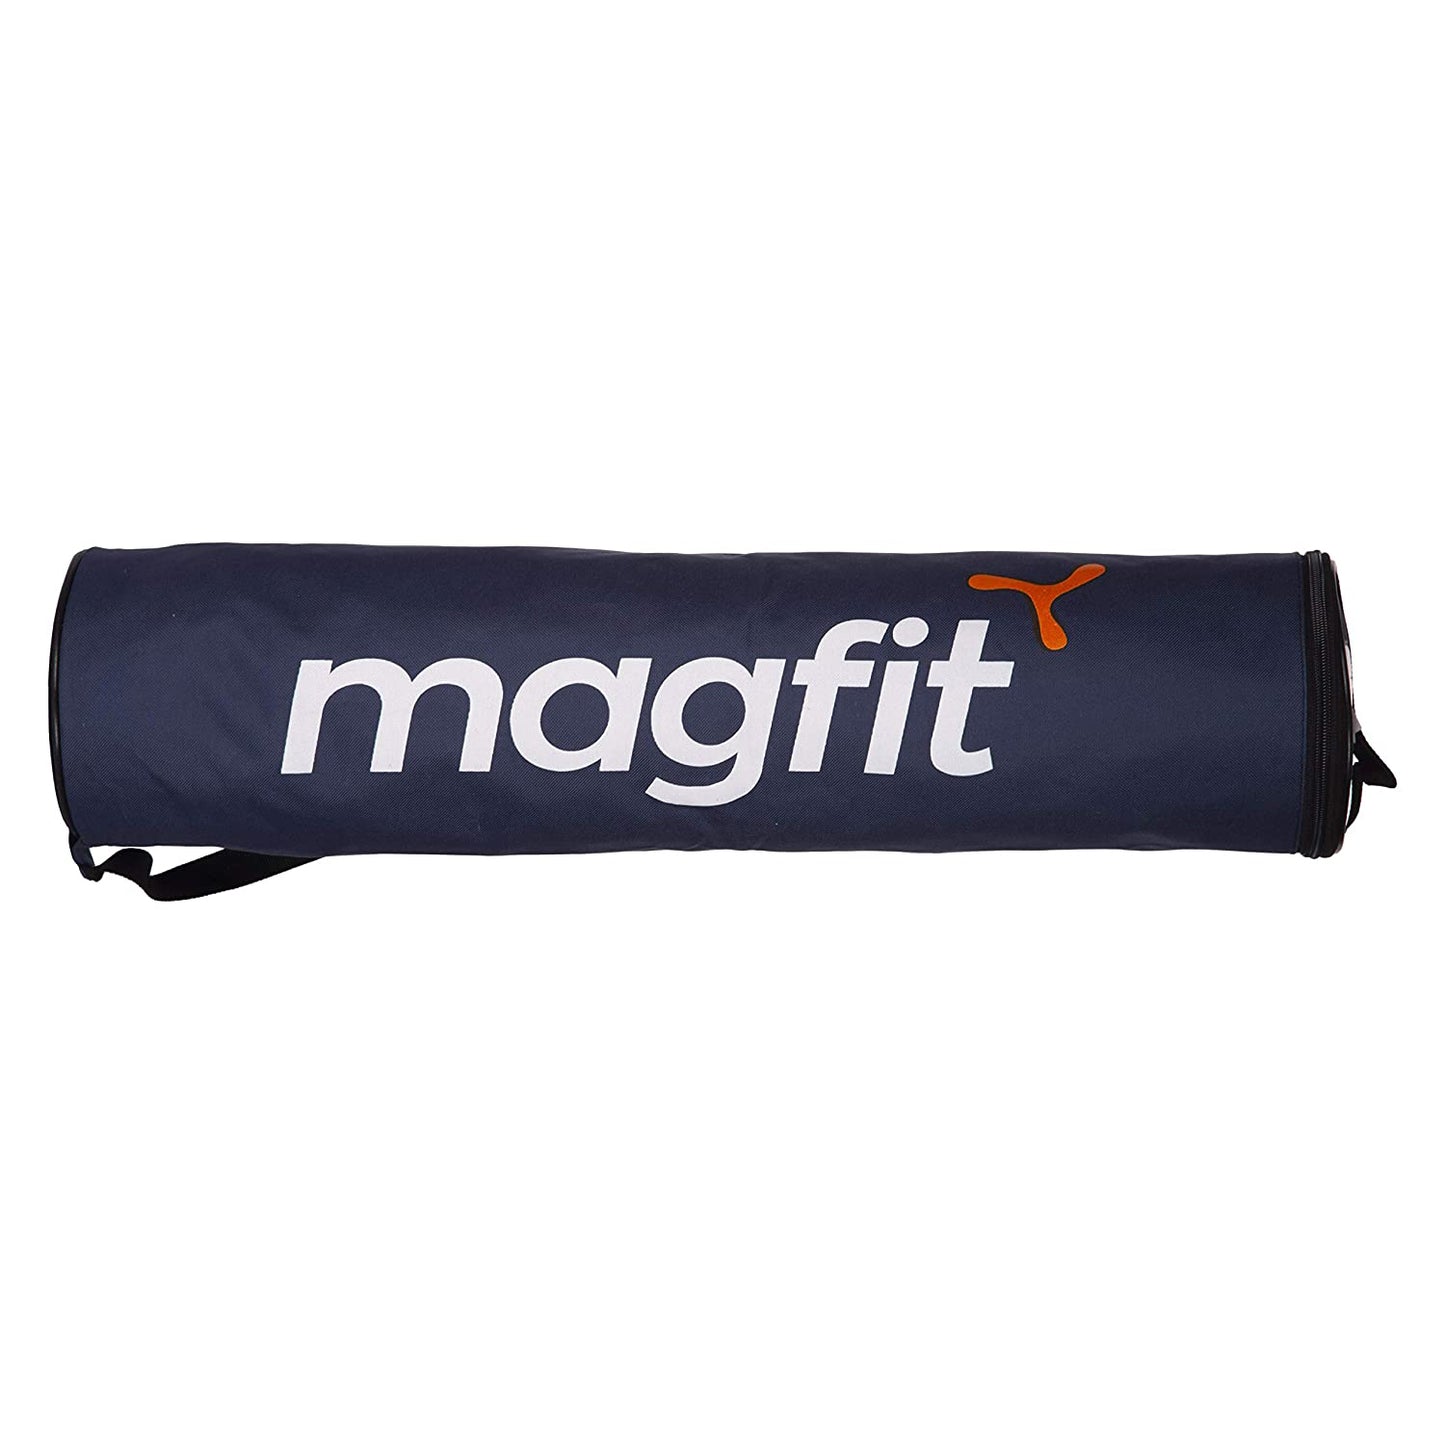 Magfit Premium Jute Yoga MAT (5 mm, Green) - Best Price online Prokicksports.com